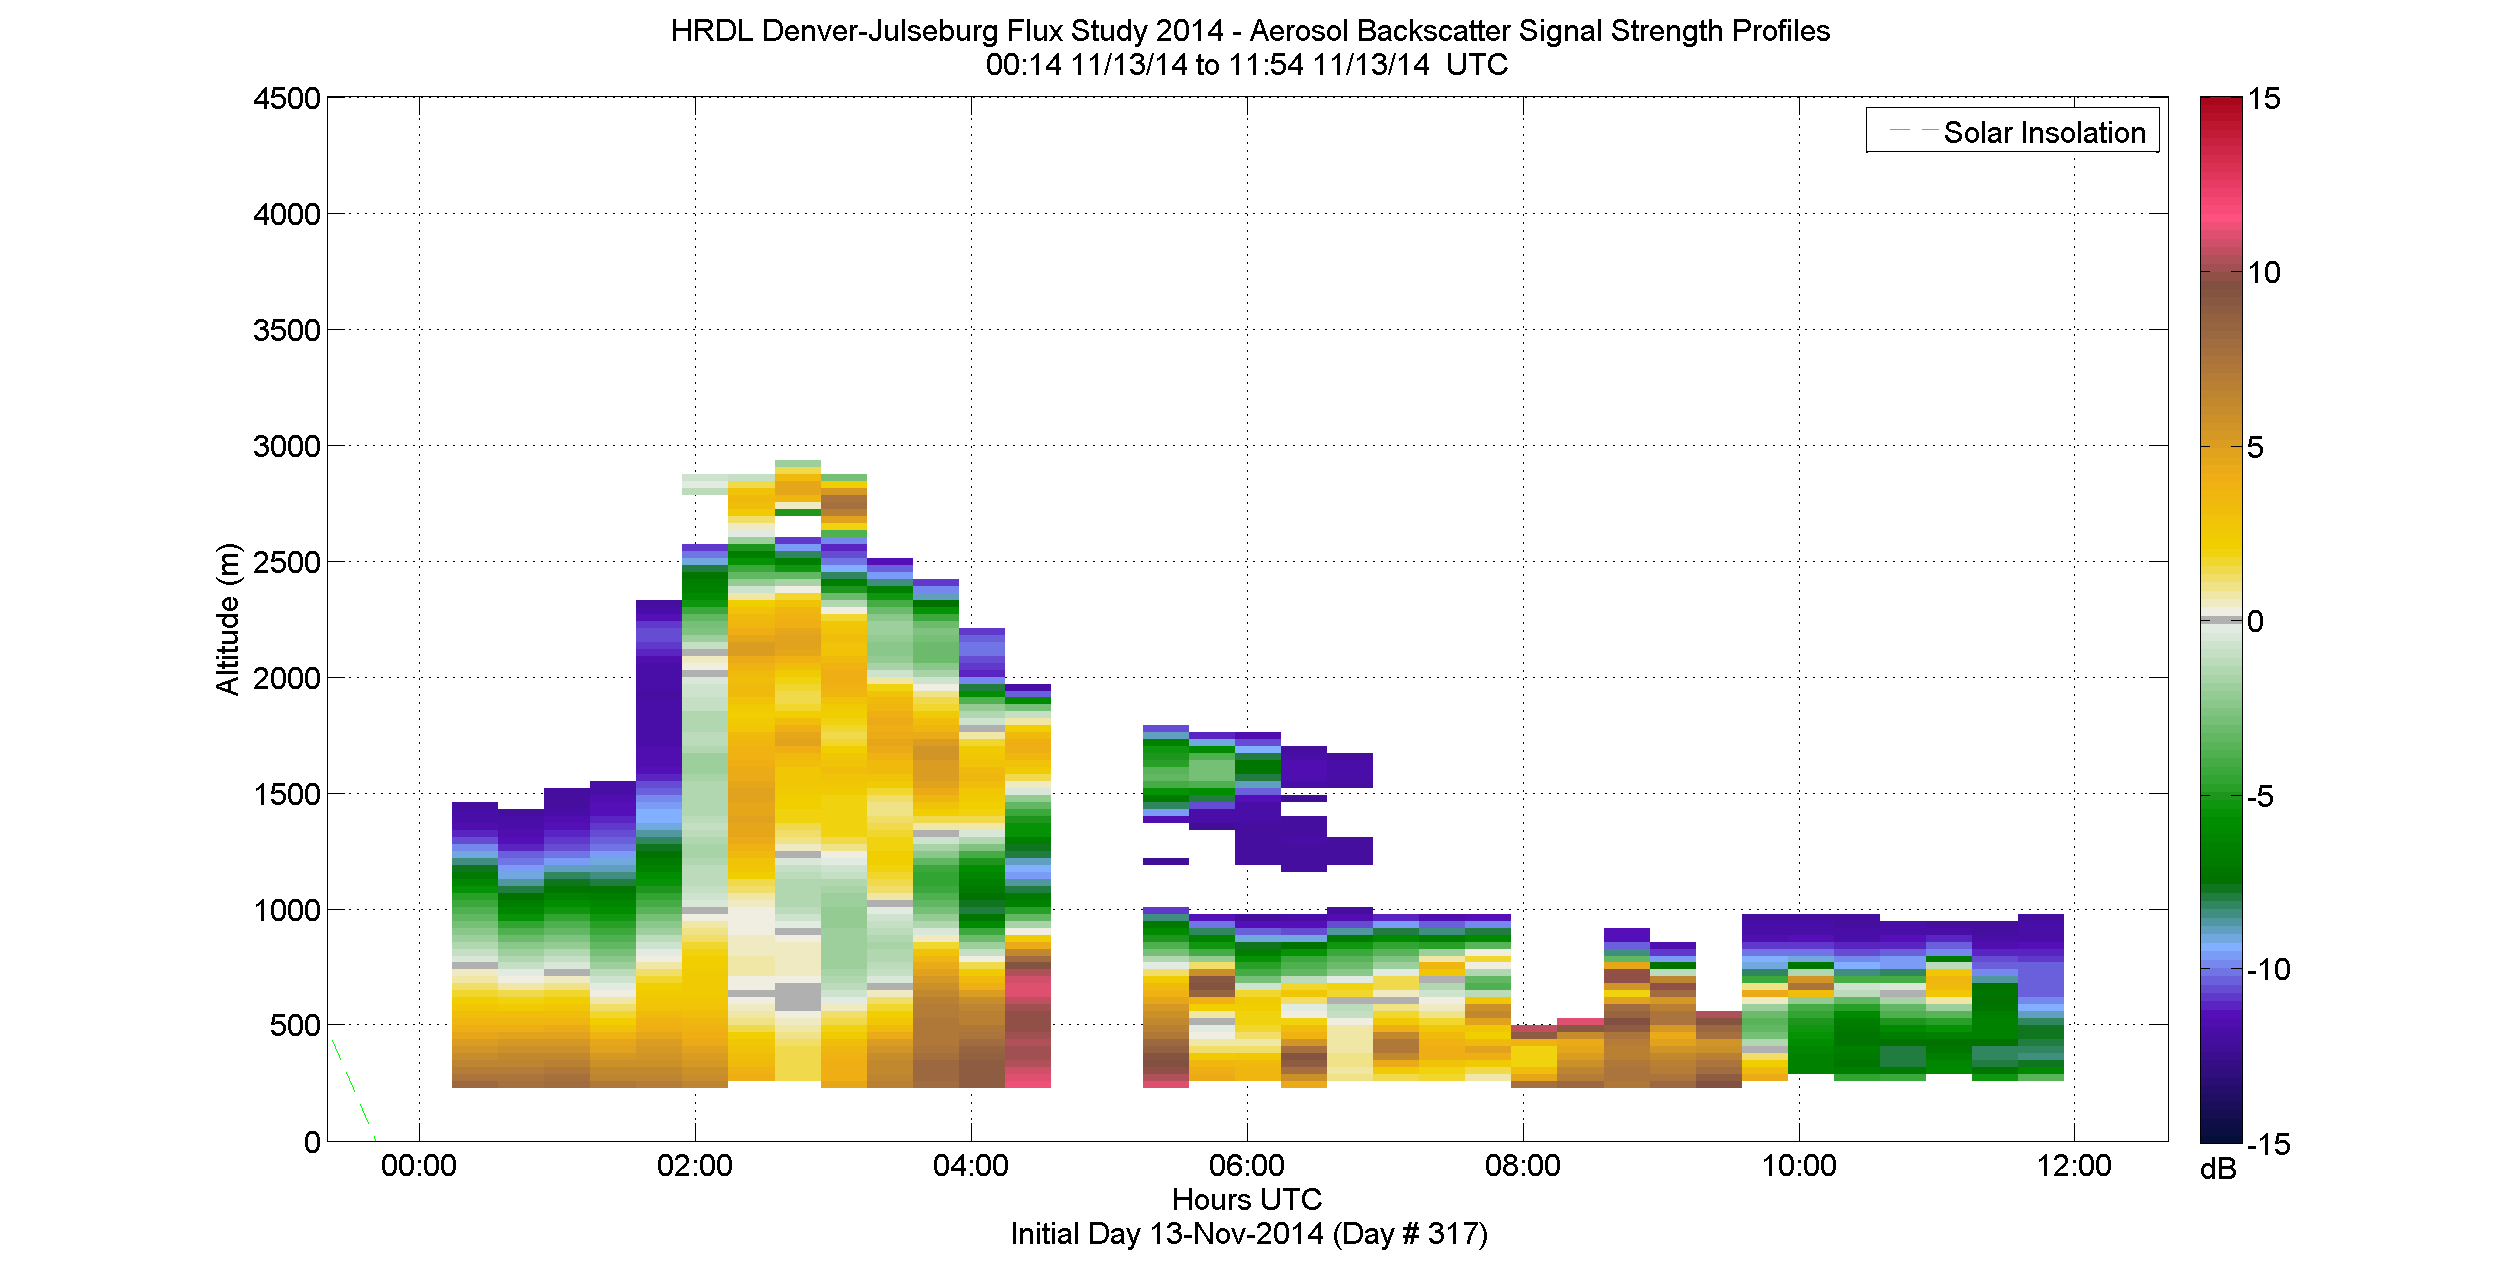 HRDL vertical intensity profile - November 13 am